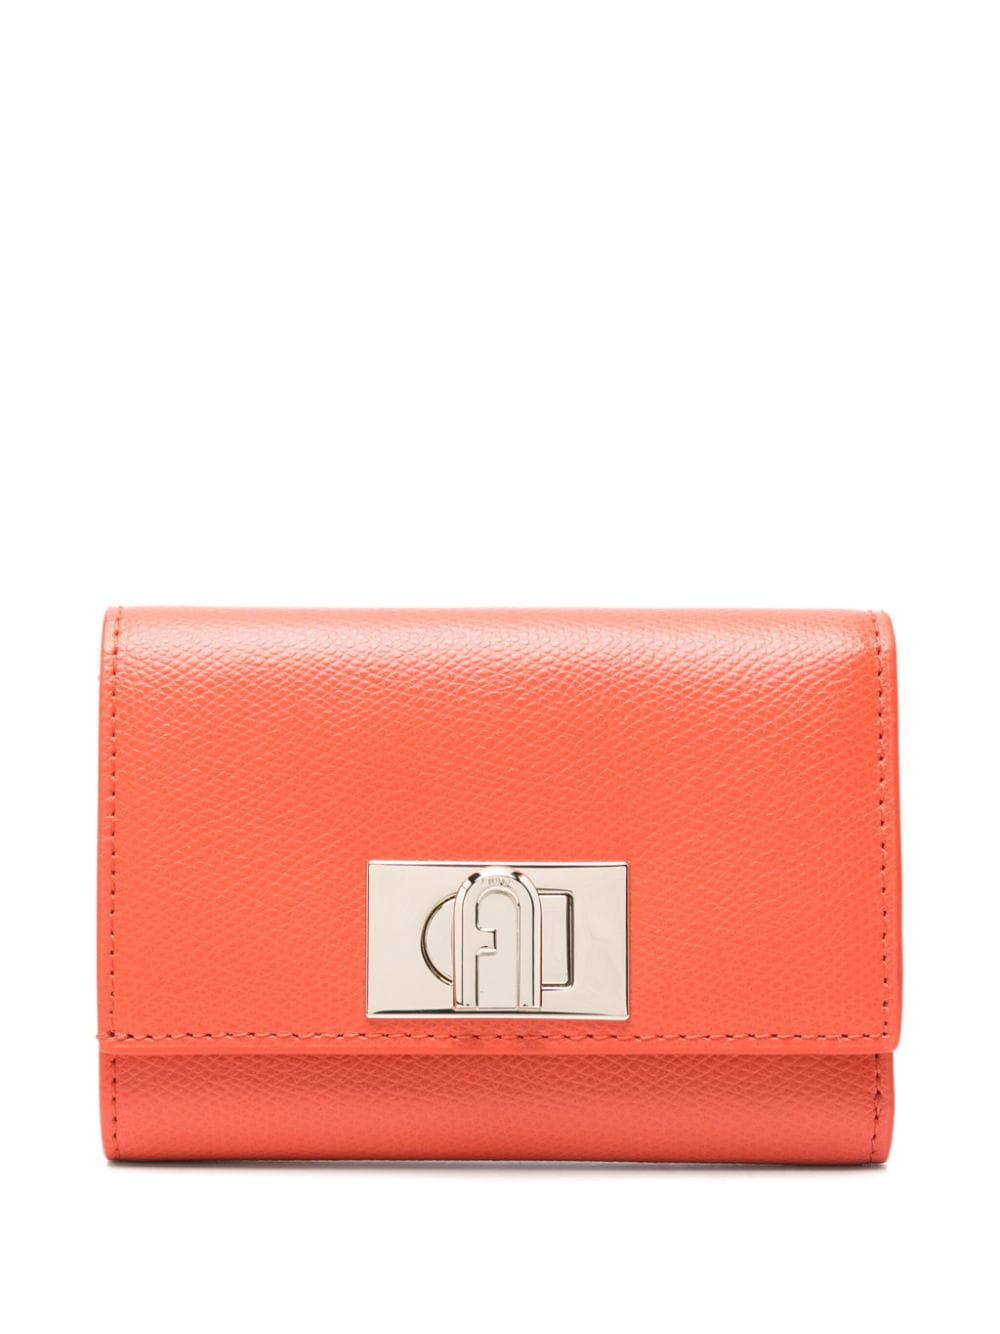 Furla Furla 1927 leather wallet - Orange von Furla